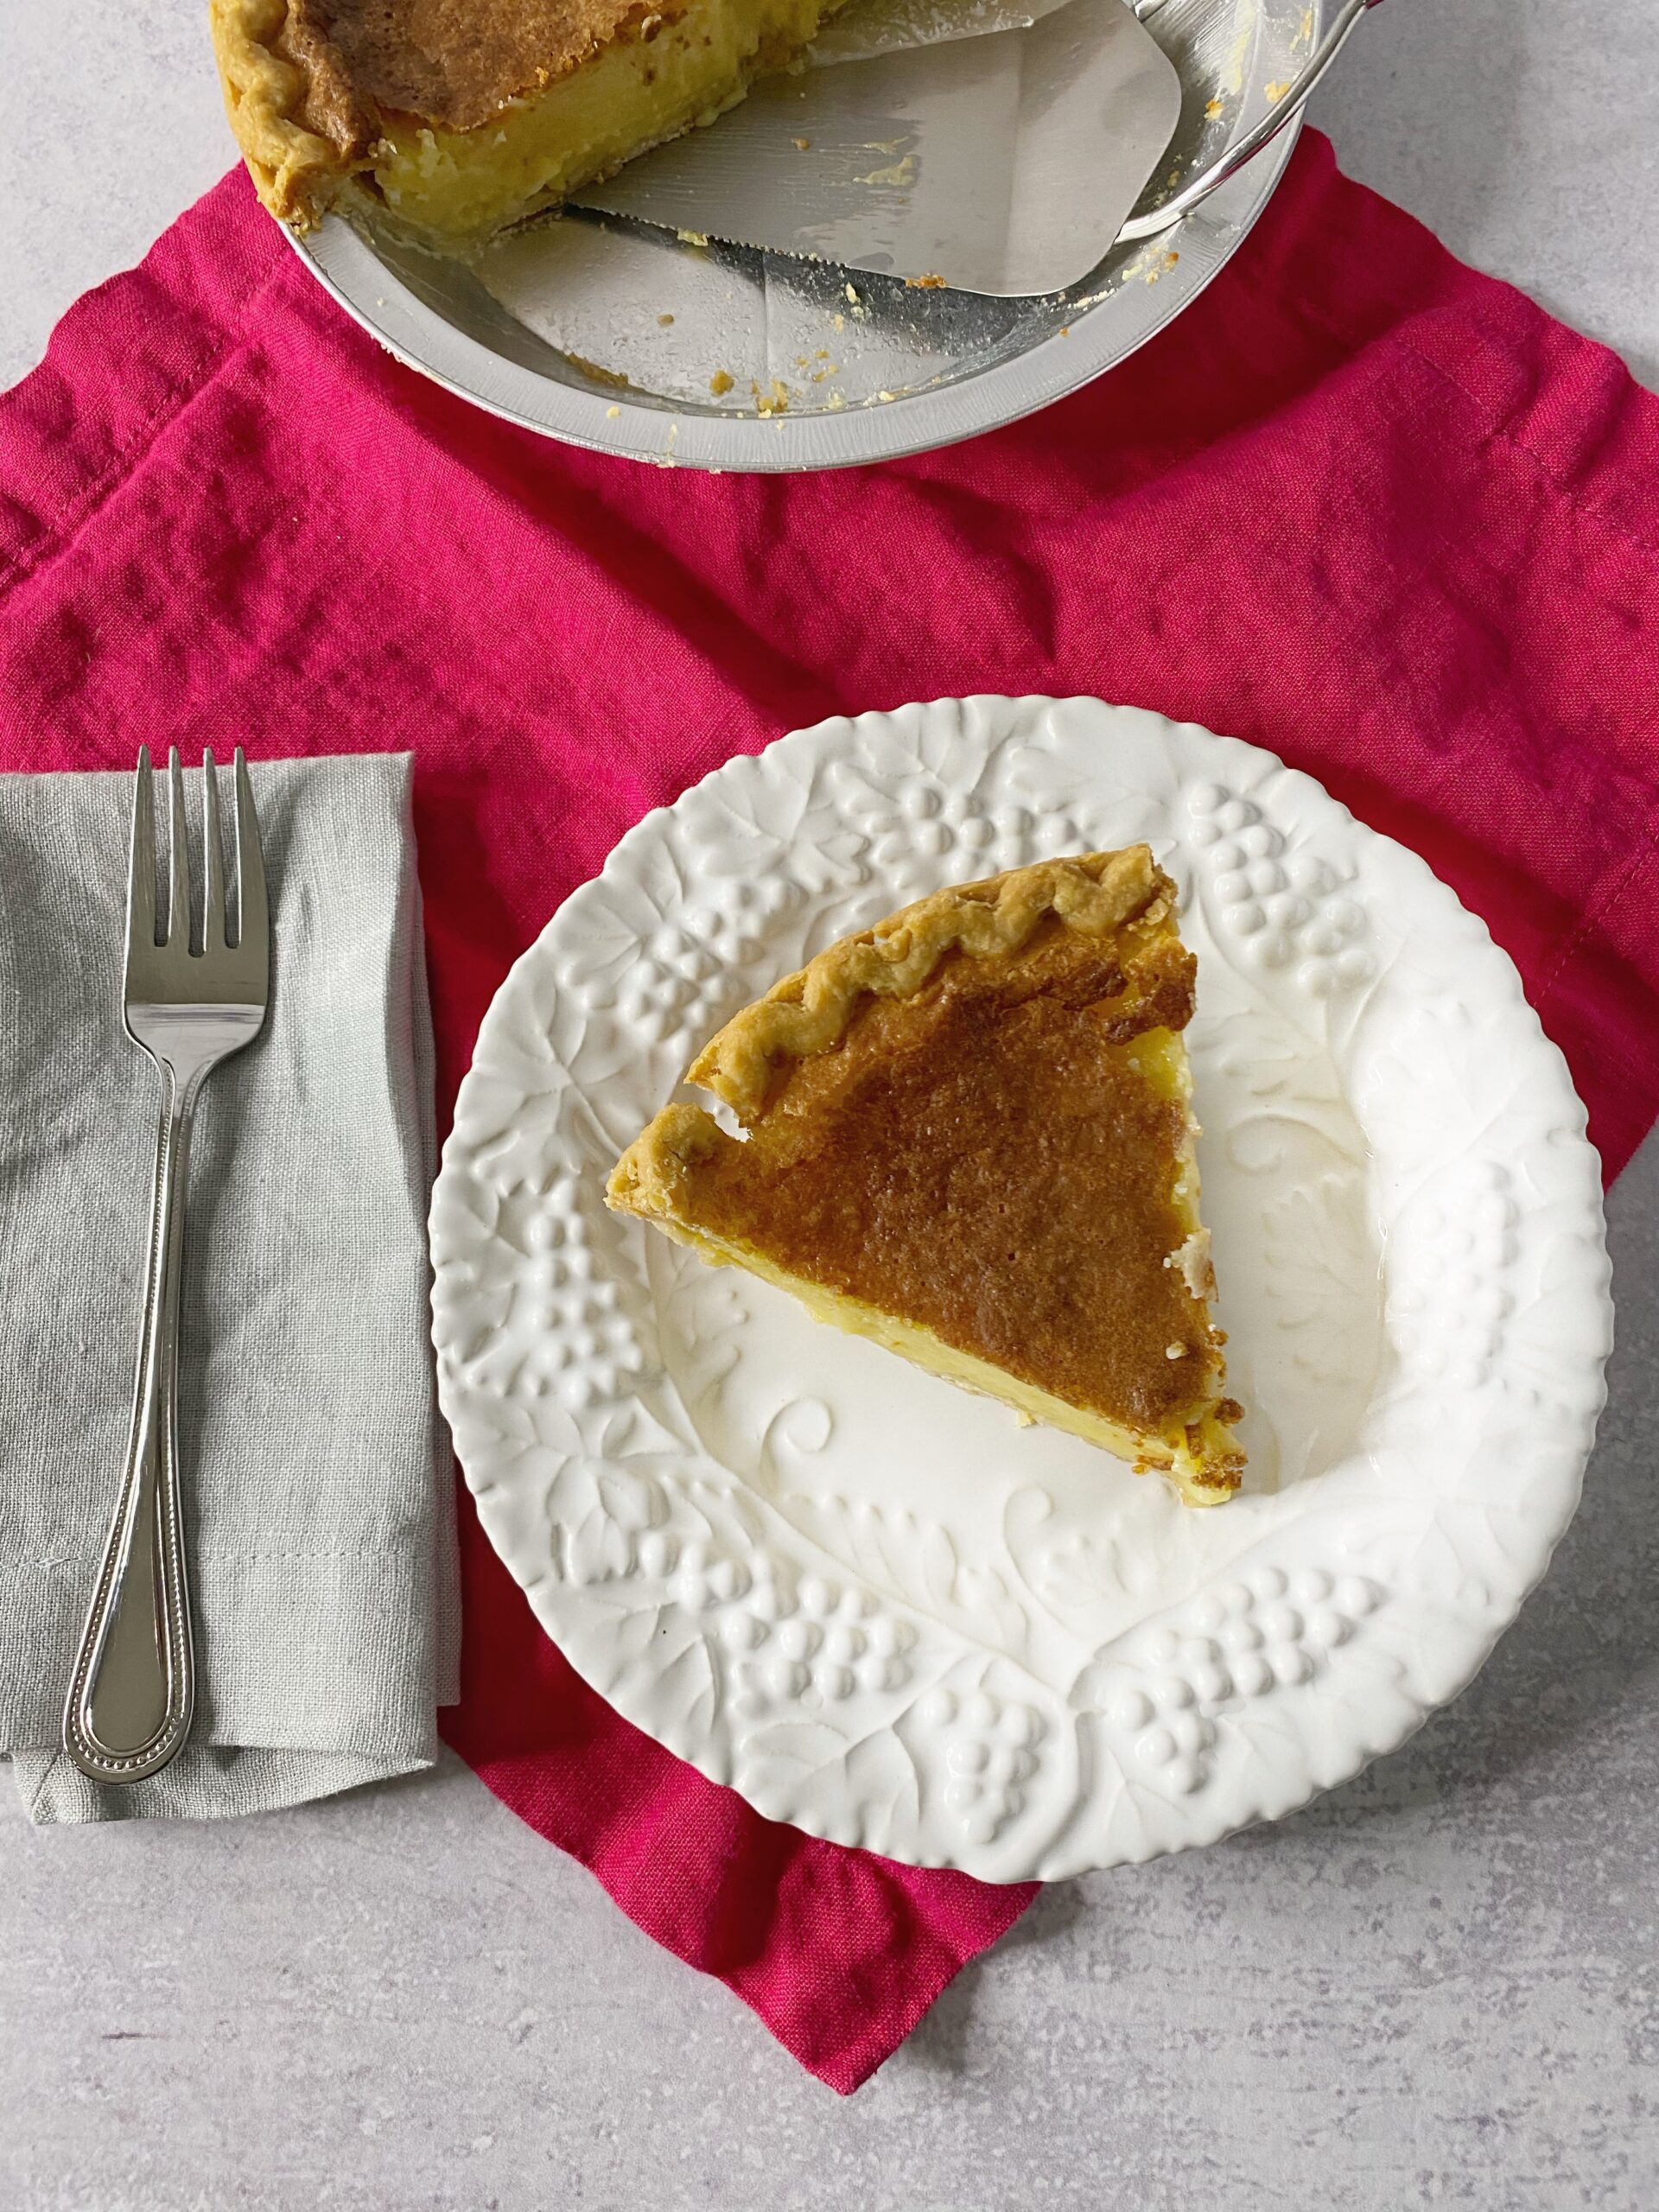 A Southern Classic – Buttermilk Pie